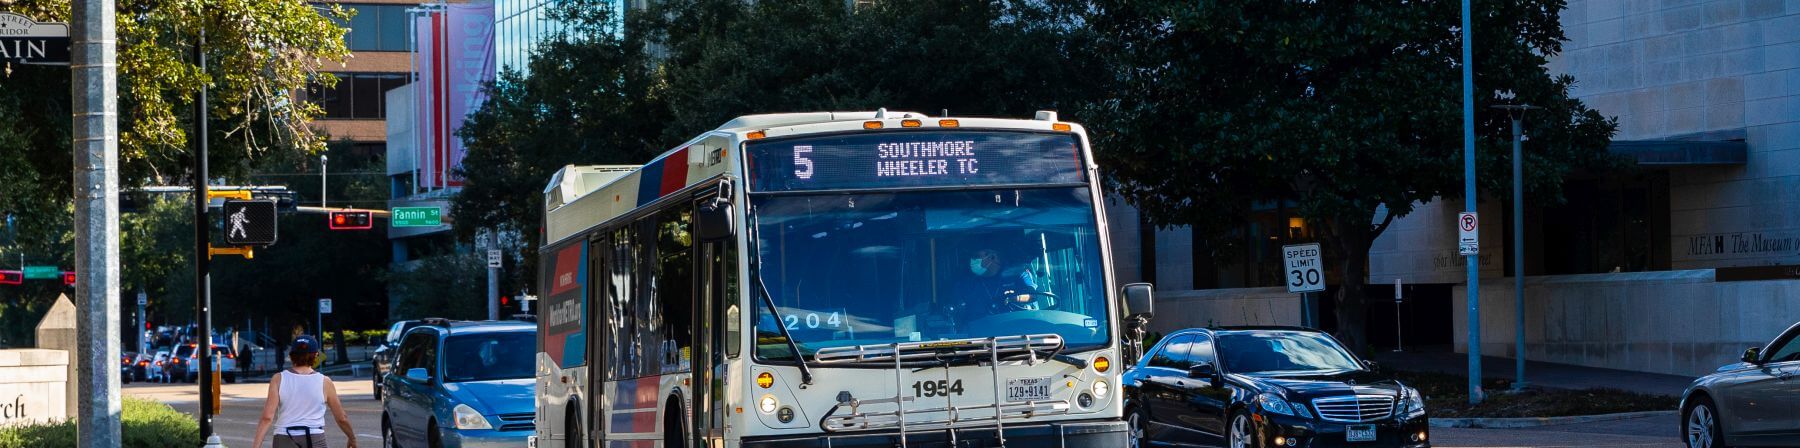 5 Southmore bus